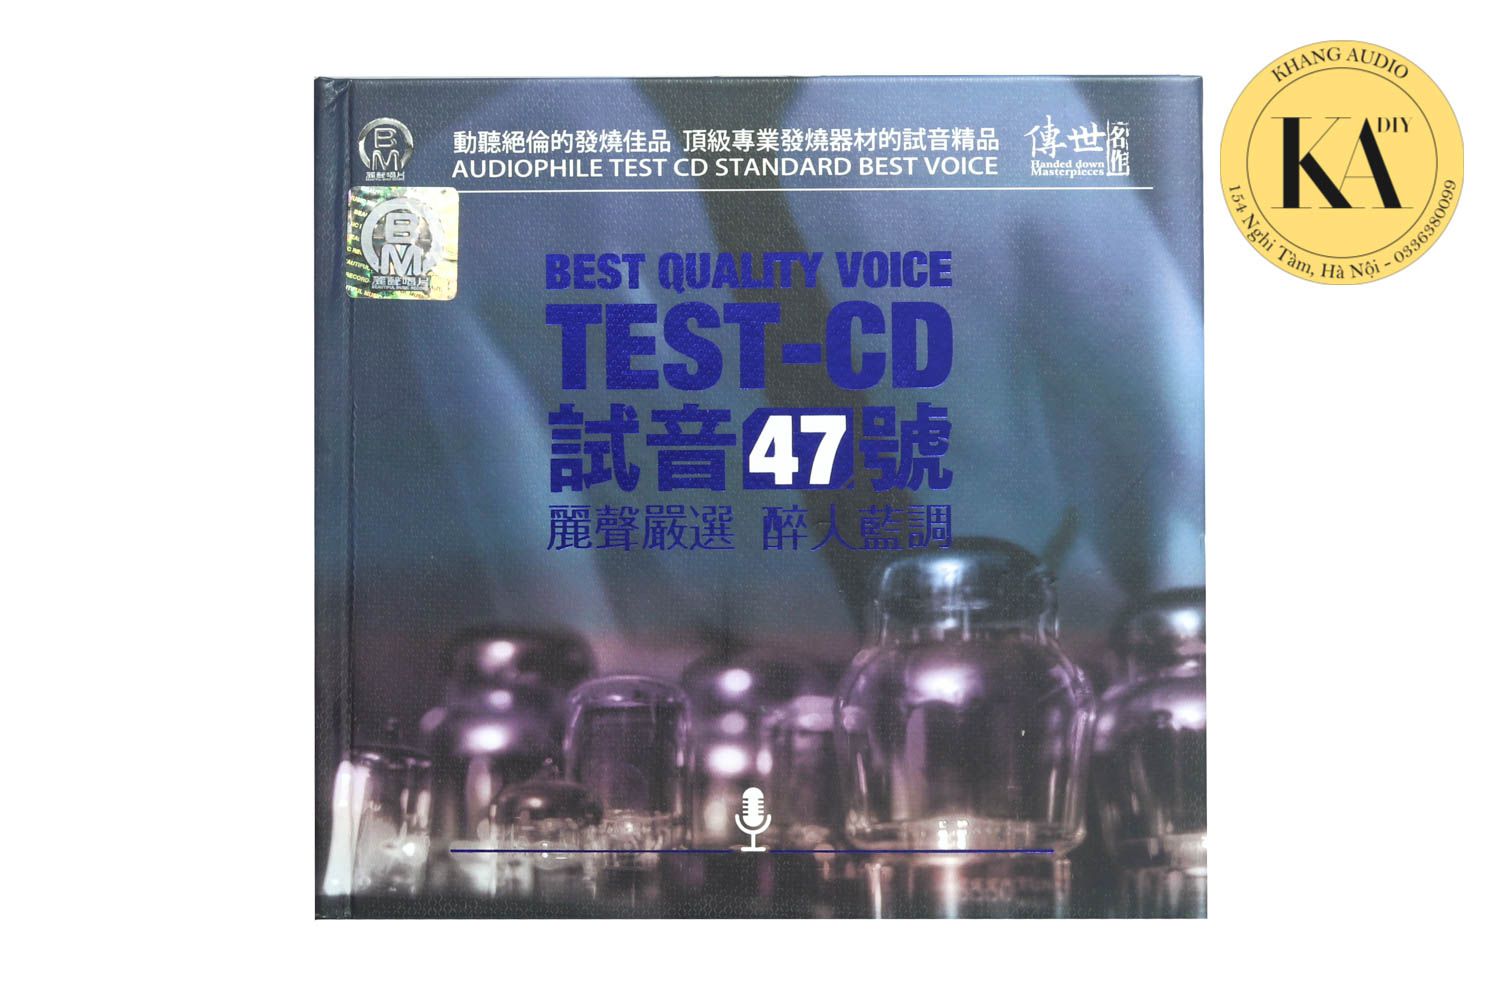 Test CD No.47 Khang Audio 0336380099